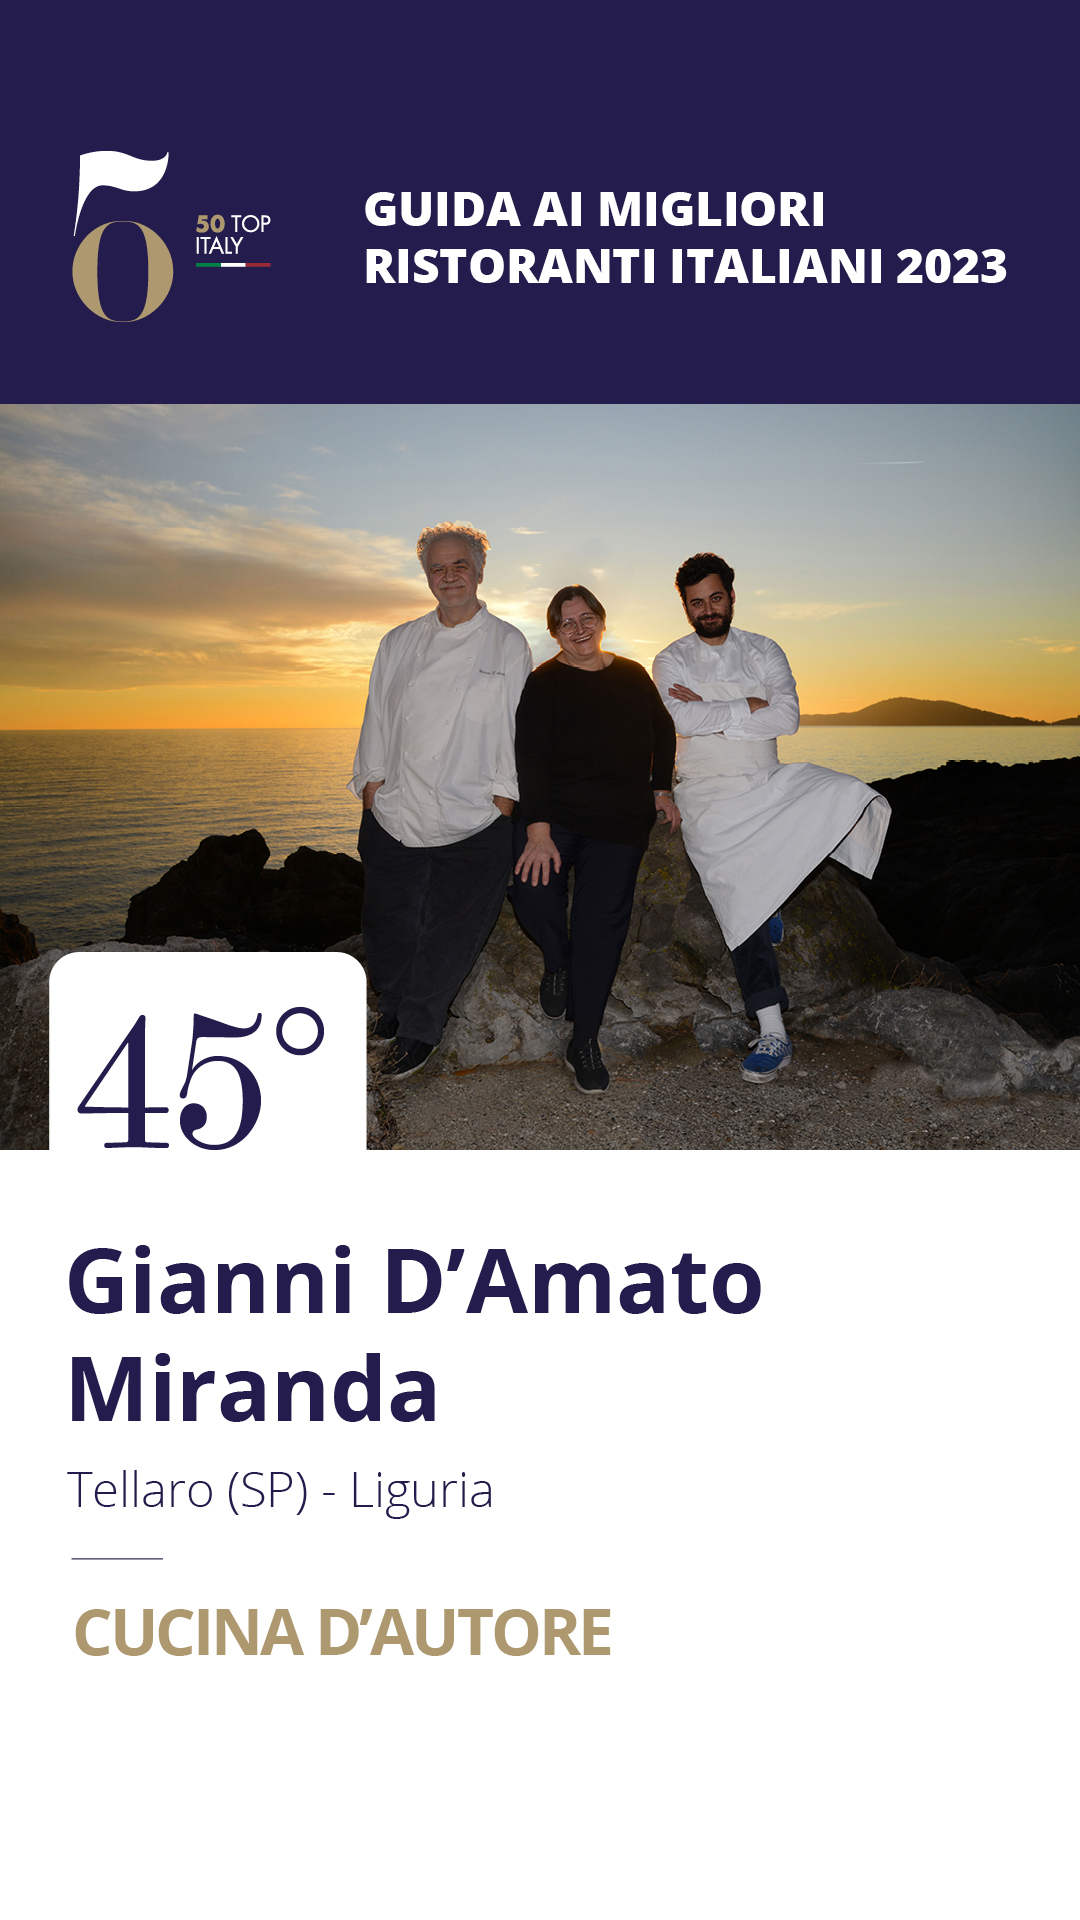 45 - Gianni D'Amato Miranda